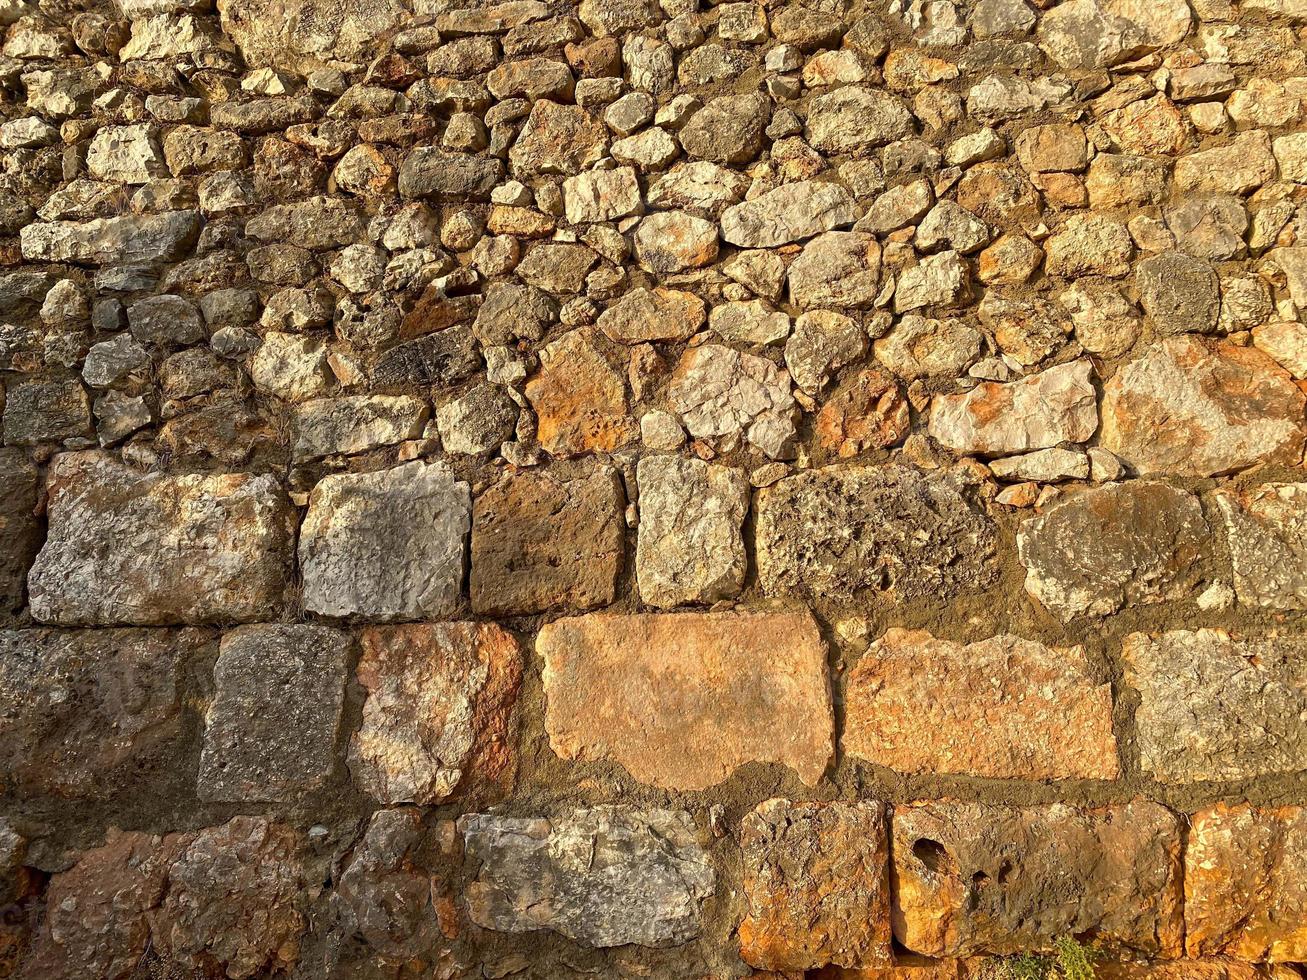 Background, texture, stone wall of round stones cobblestones bricks natural surface natural sharp convex rough stone cobblestone with cracks photo